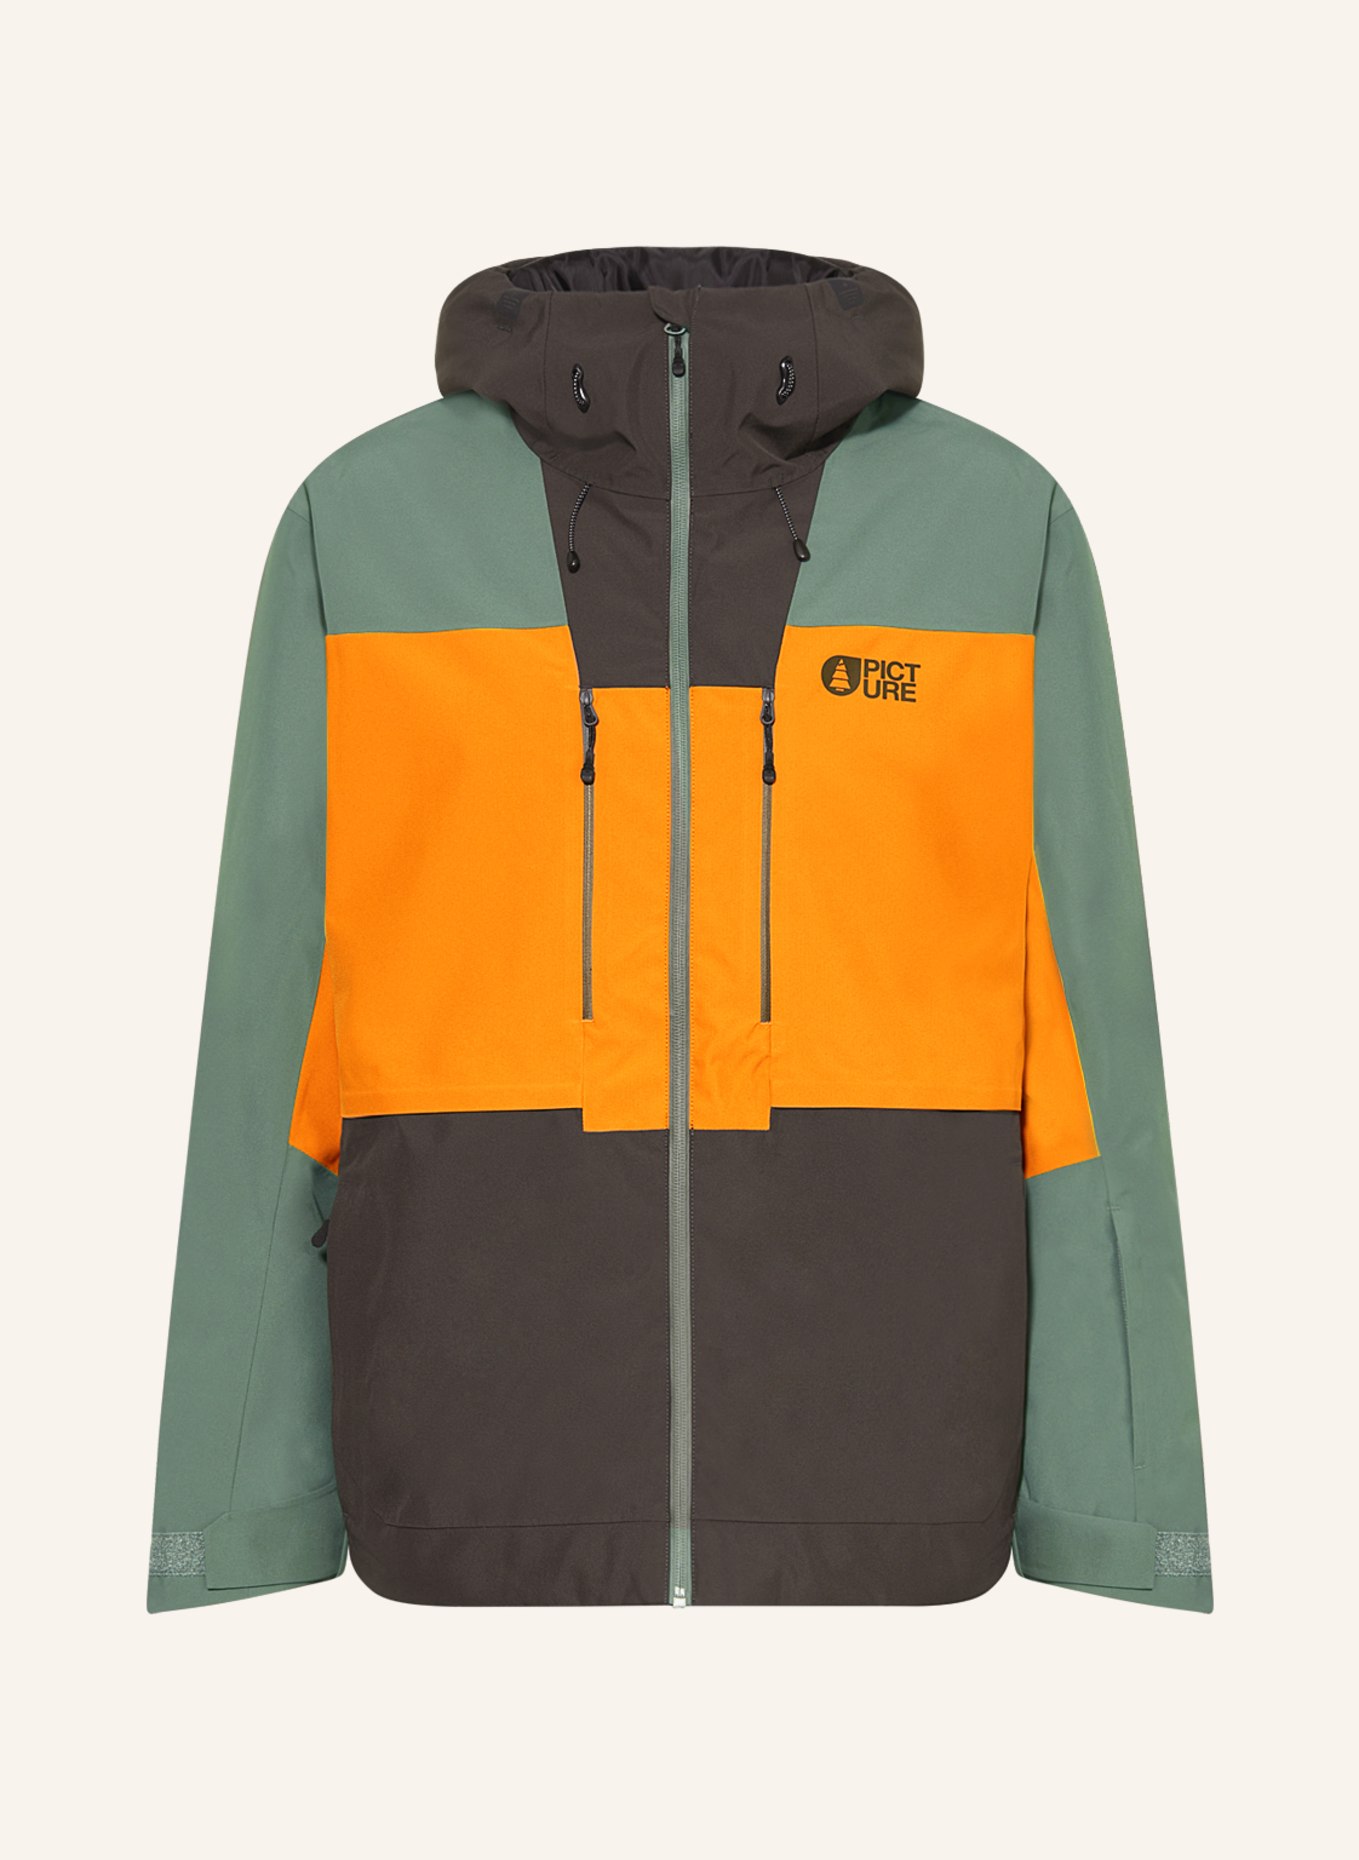 PICTURE Skijacke OBJECT in oliv/ dunkelgrau orange